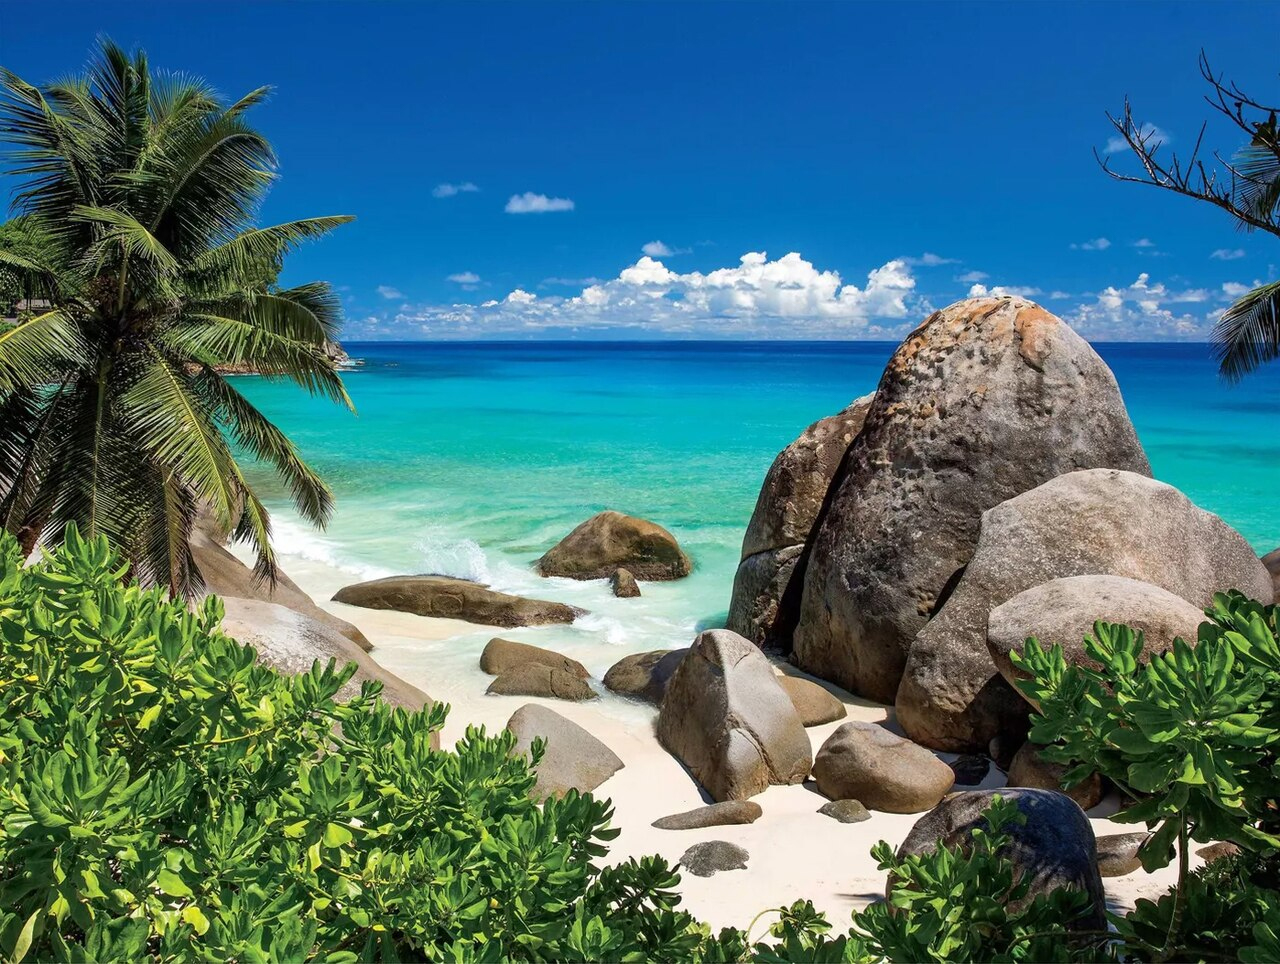 Seychelles - Scratch and Dent Beach & Ocean Jigsaw Puzzle